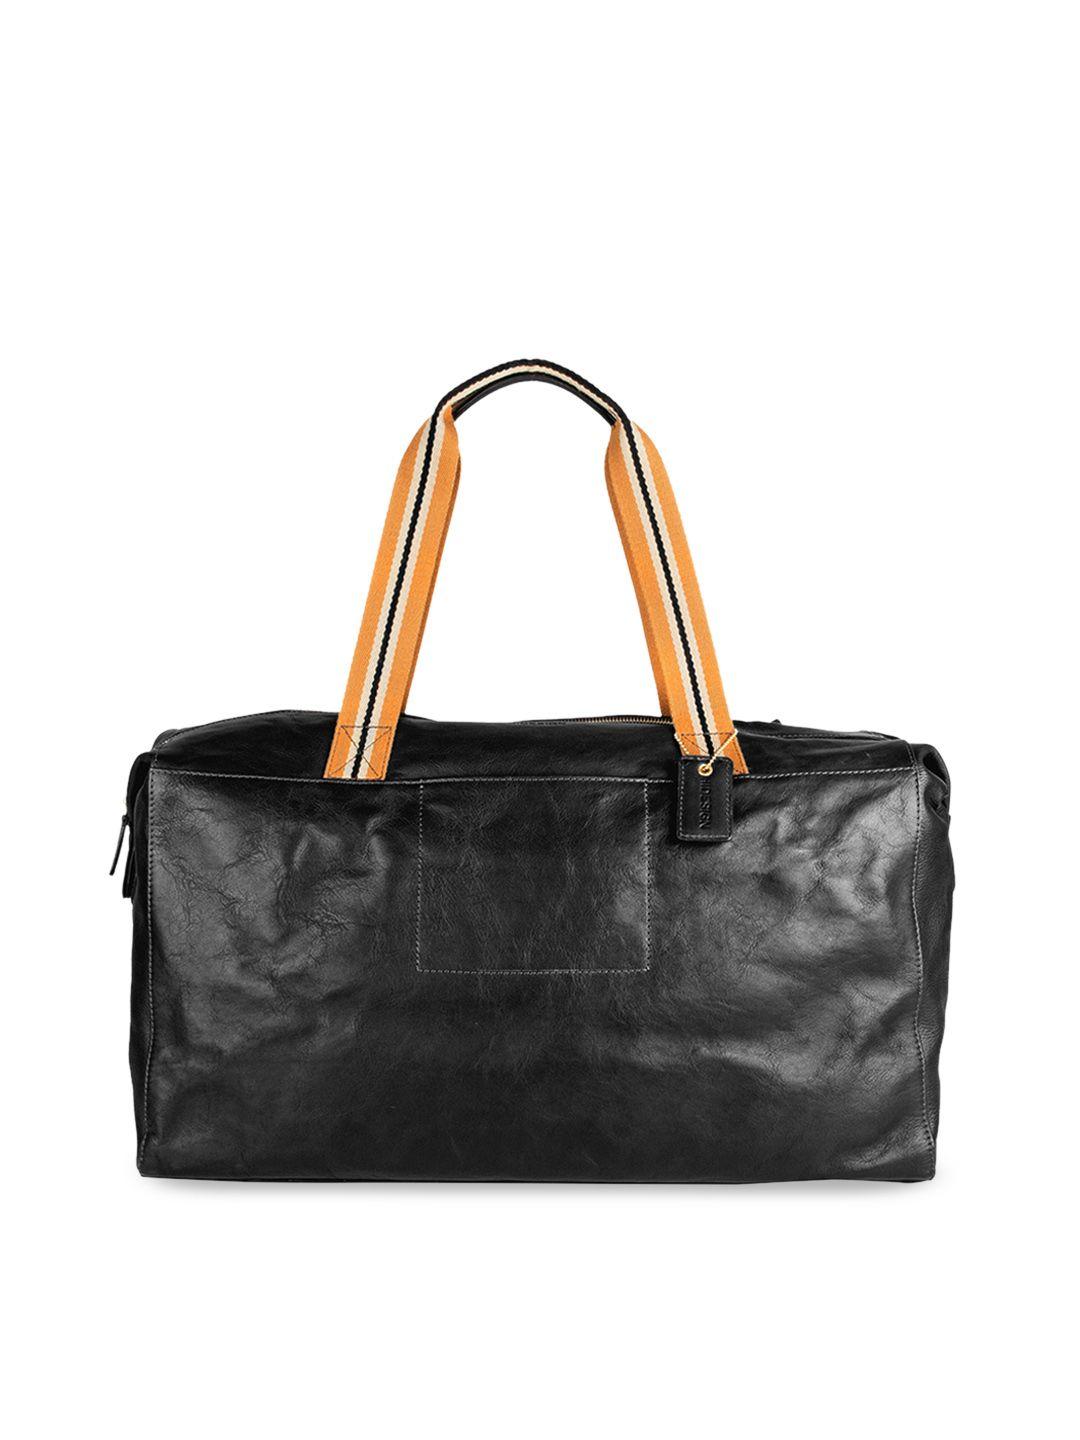 hidesign men black solid leather duffel bag